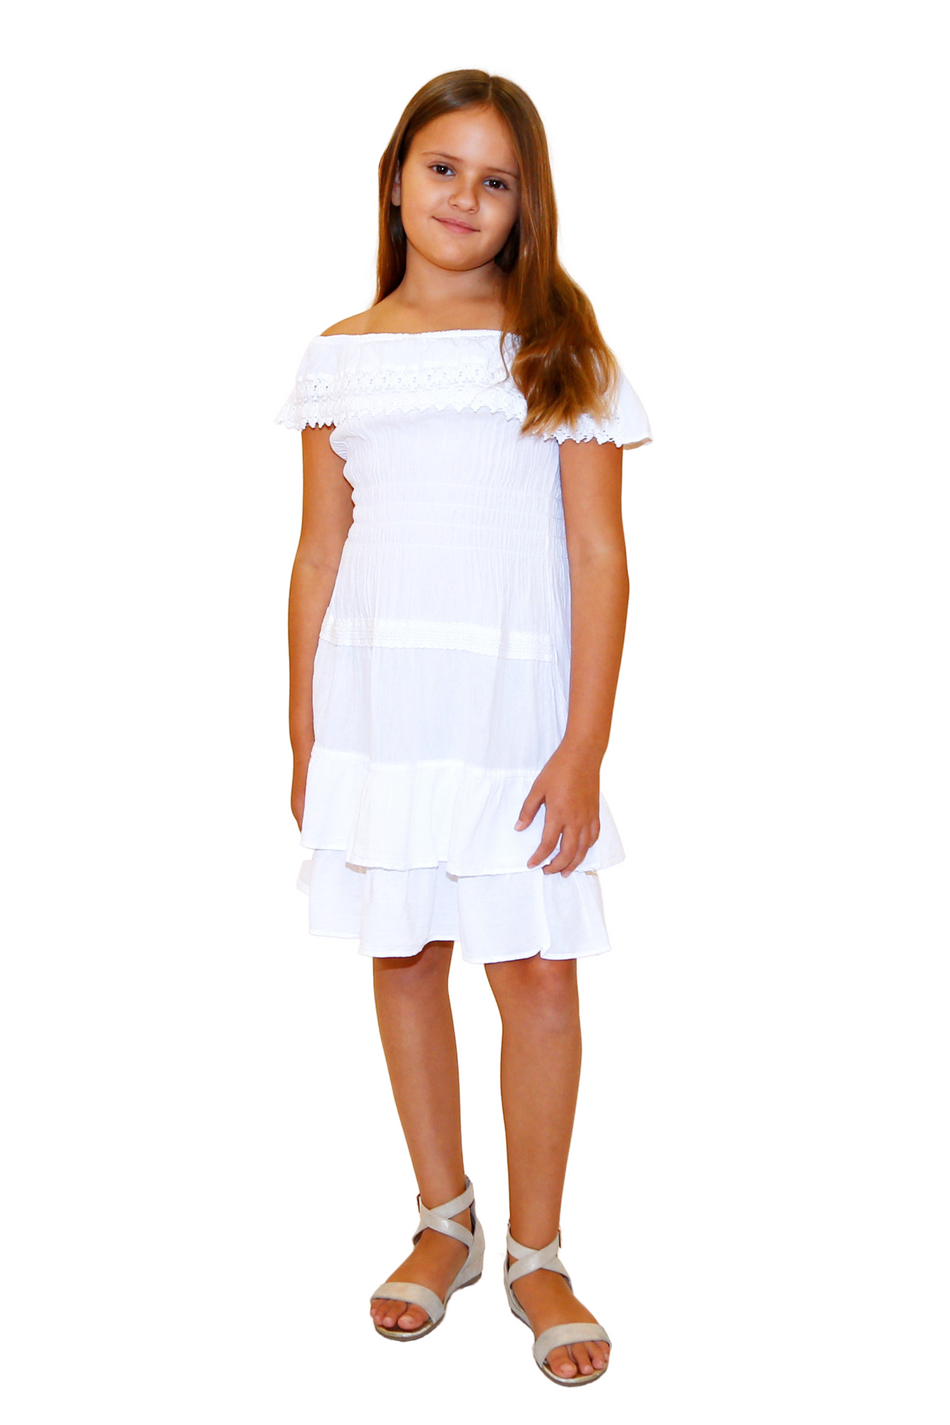 G1005 - White Cotton Dress